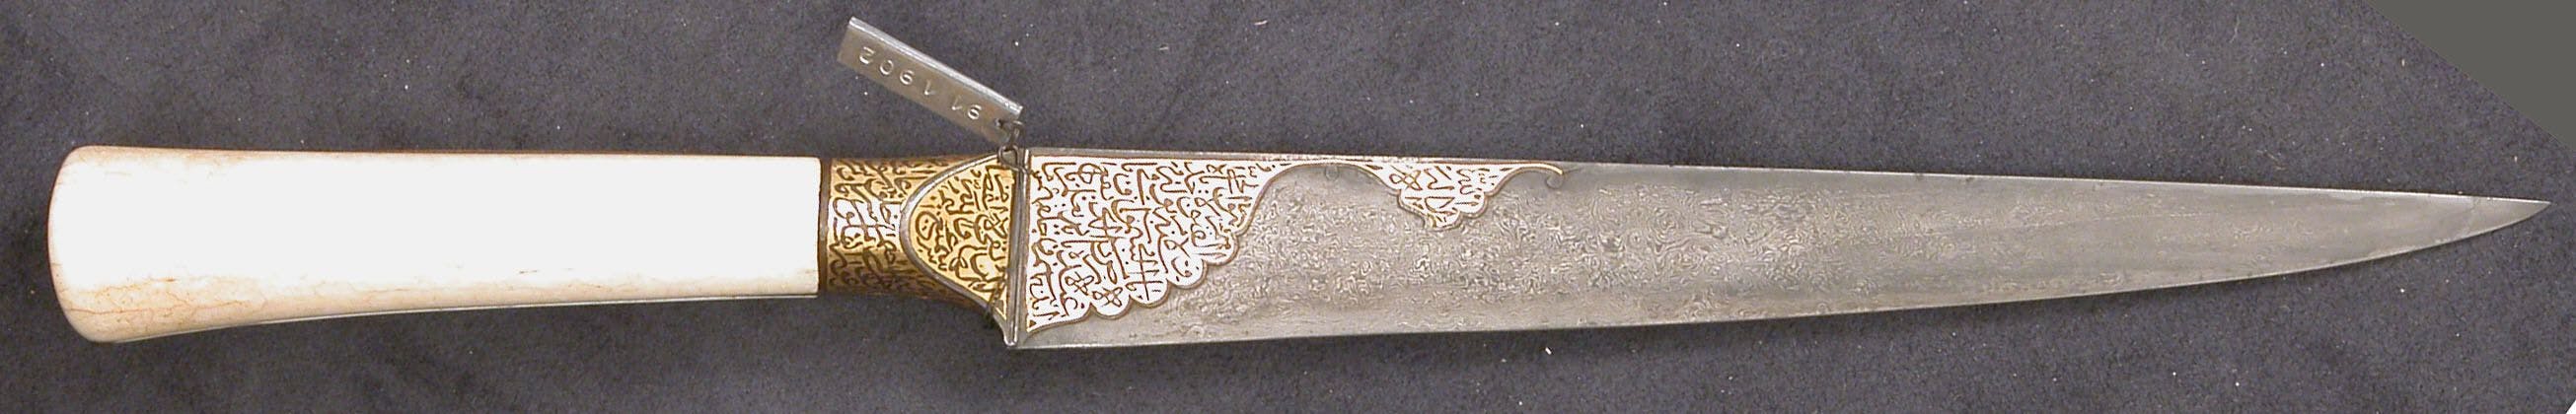 19th Century Iranian dagger with Damascus blade and Koftgari near the hilt